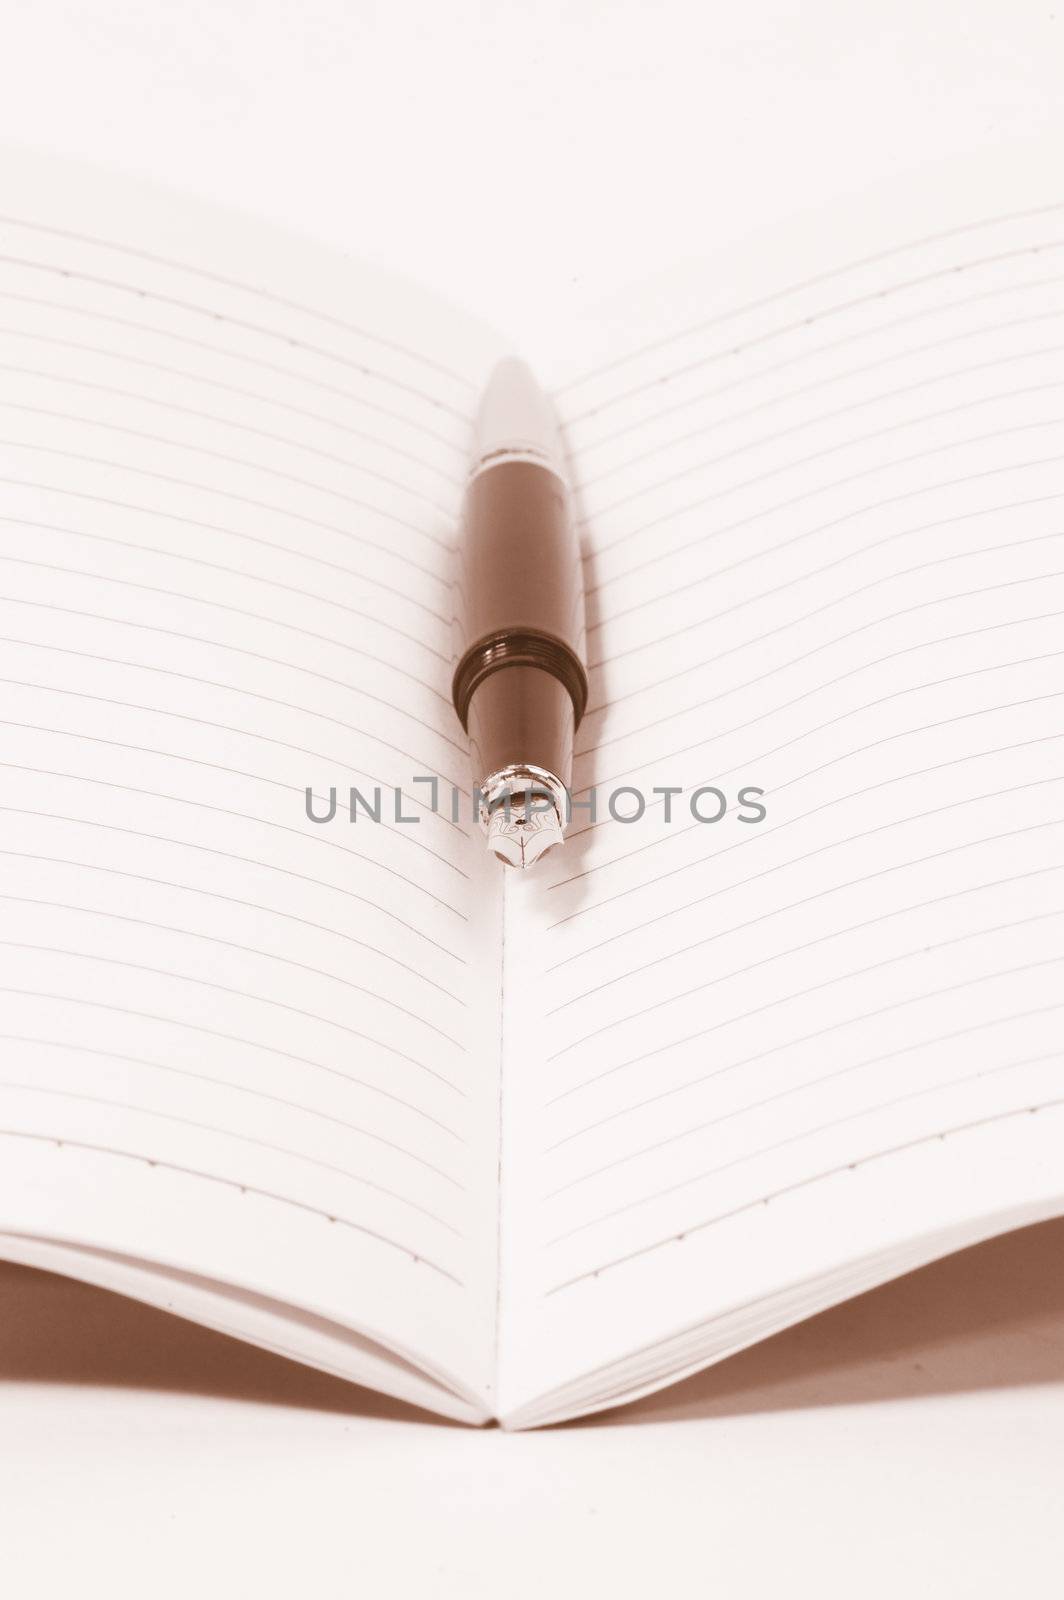 classic black fountain pen on open notebook,sepia filter